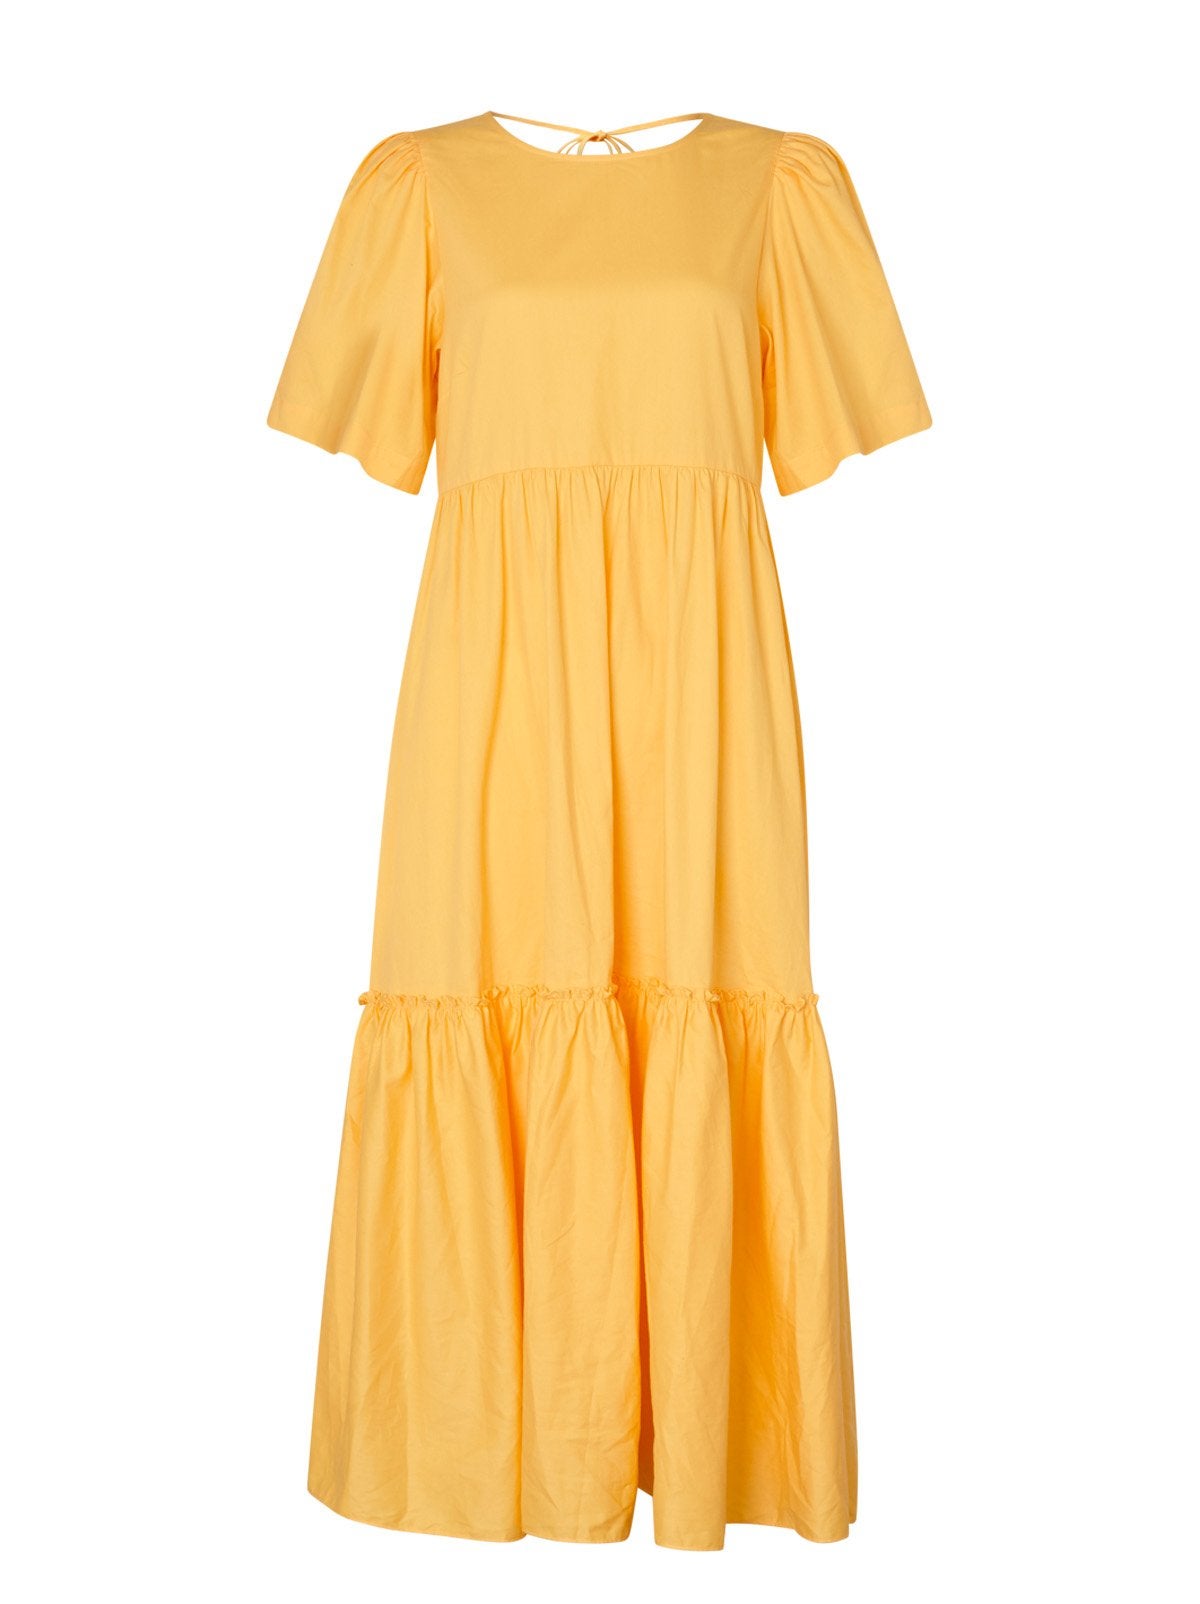 Kitri + Juicy Yellow Cotton Dress